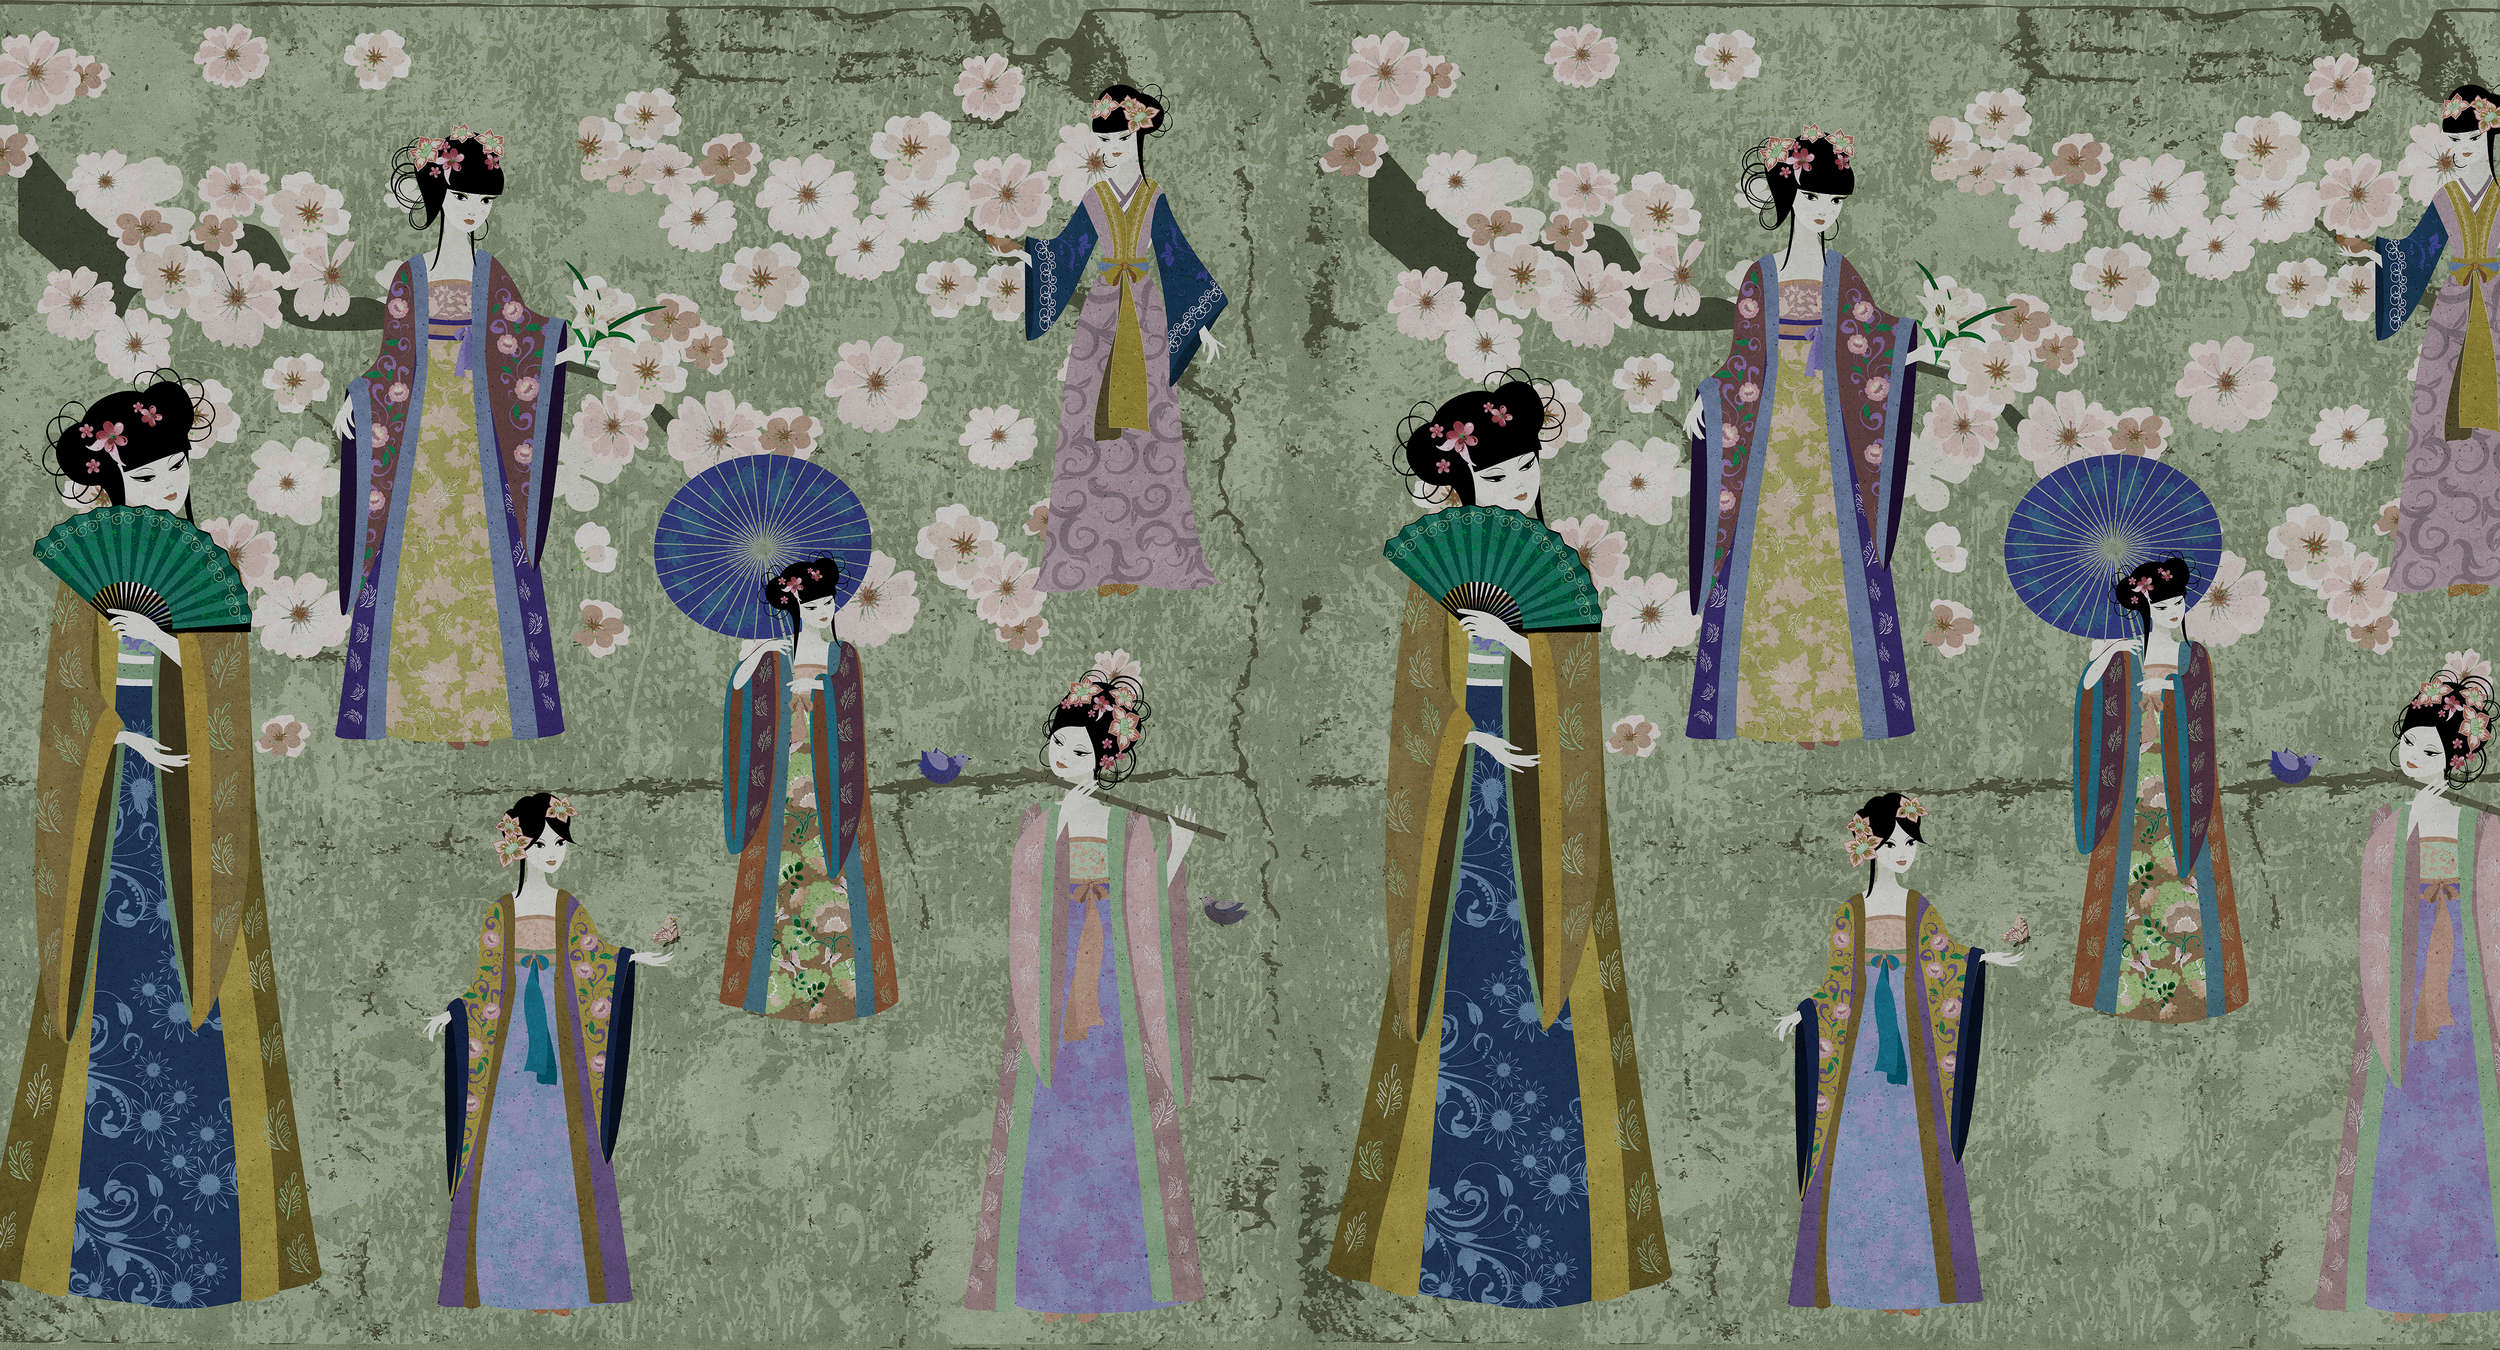             Fototapete Japan Comic mit Kirschblüten – Grün, Blau
        